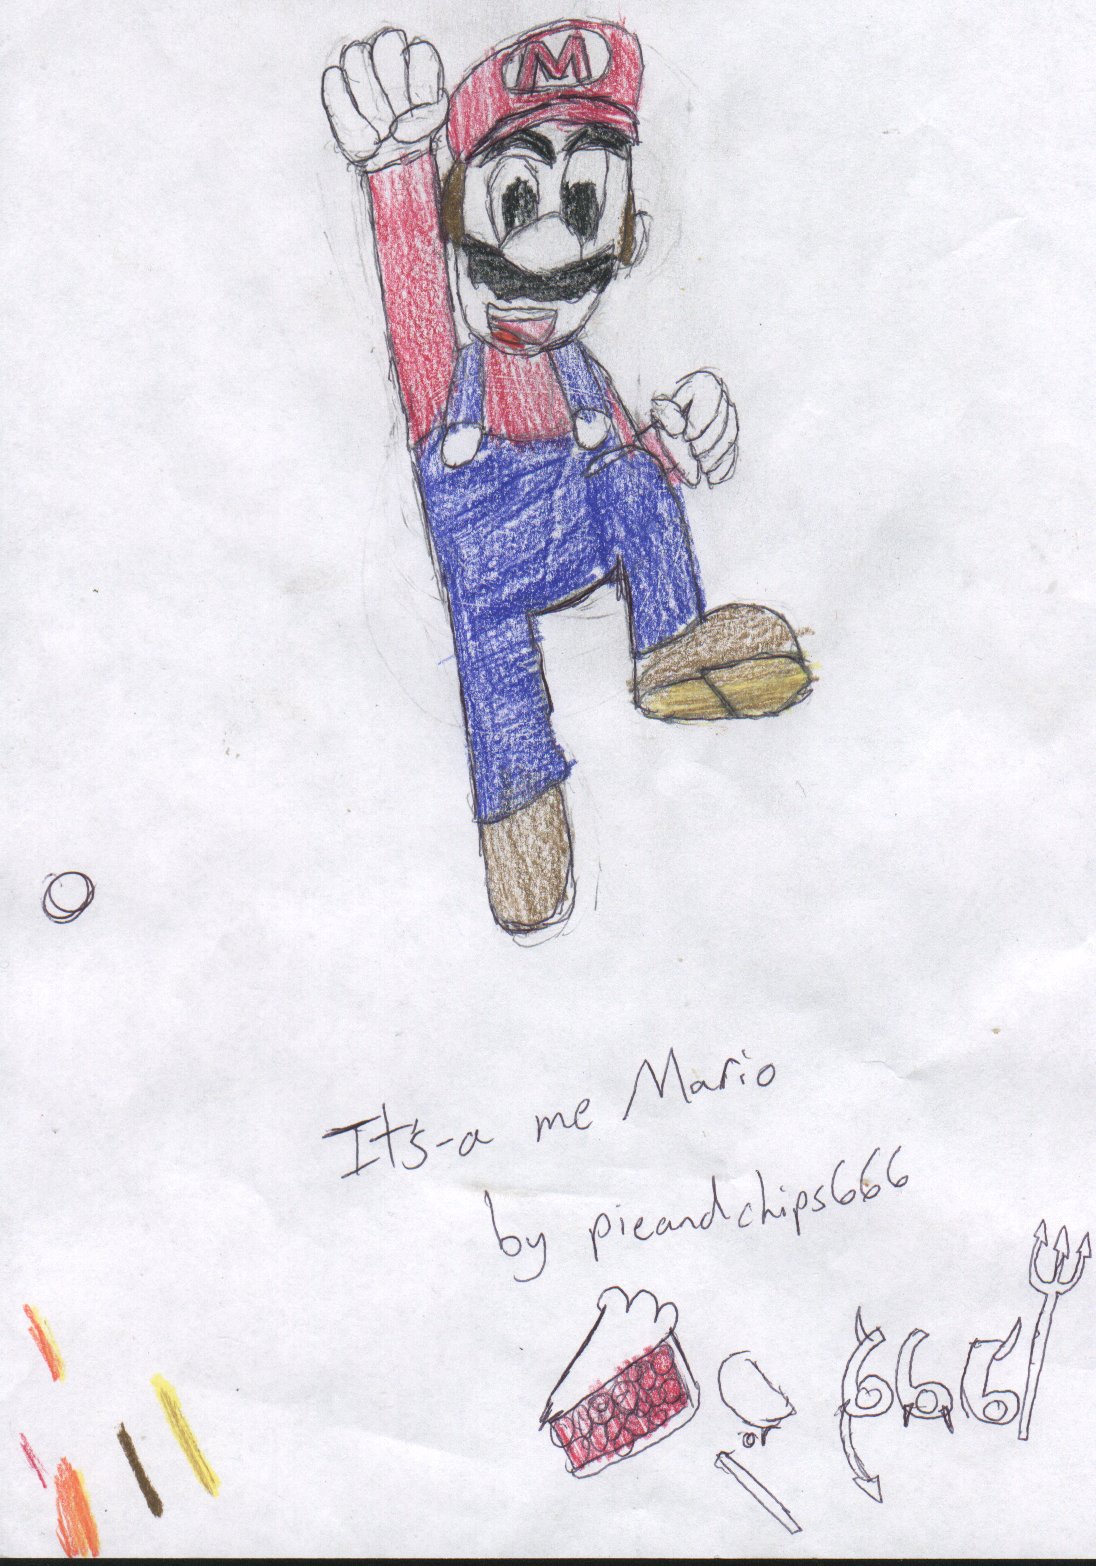 It's-a Me, Mario! by pieandchips666